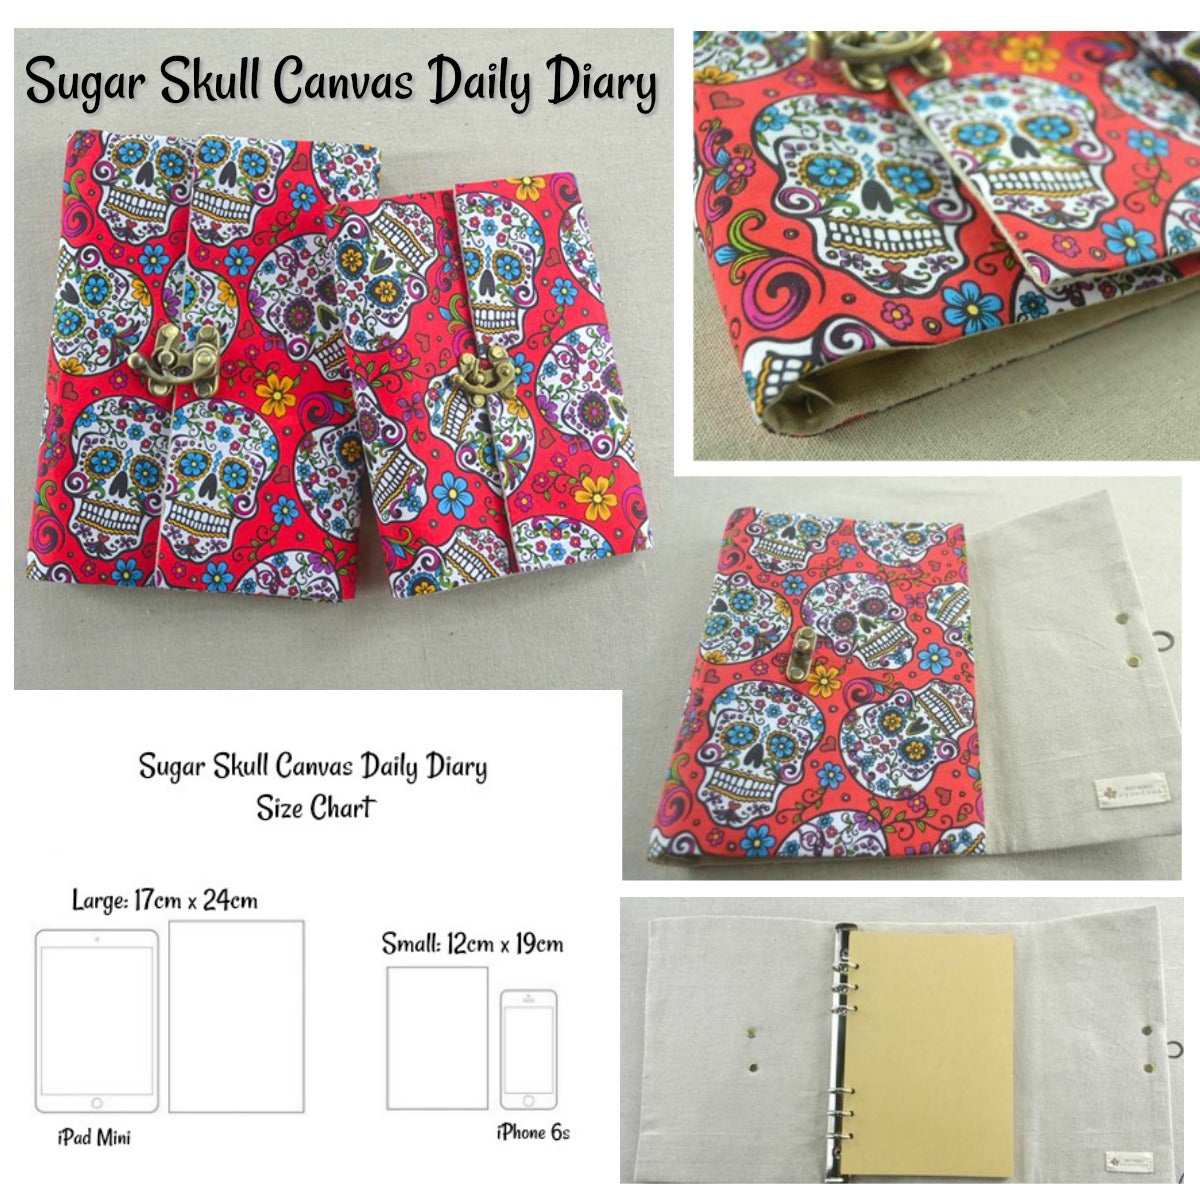 Sugar Skull Canvas Daily Diary Features Hobonichi Style Filofax